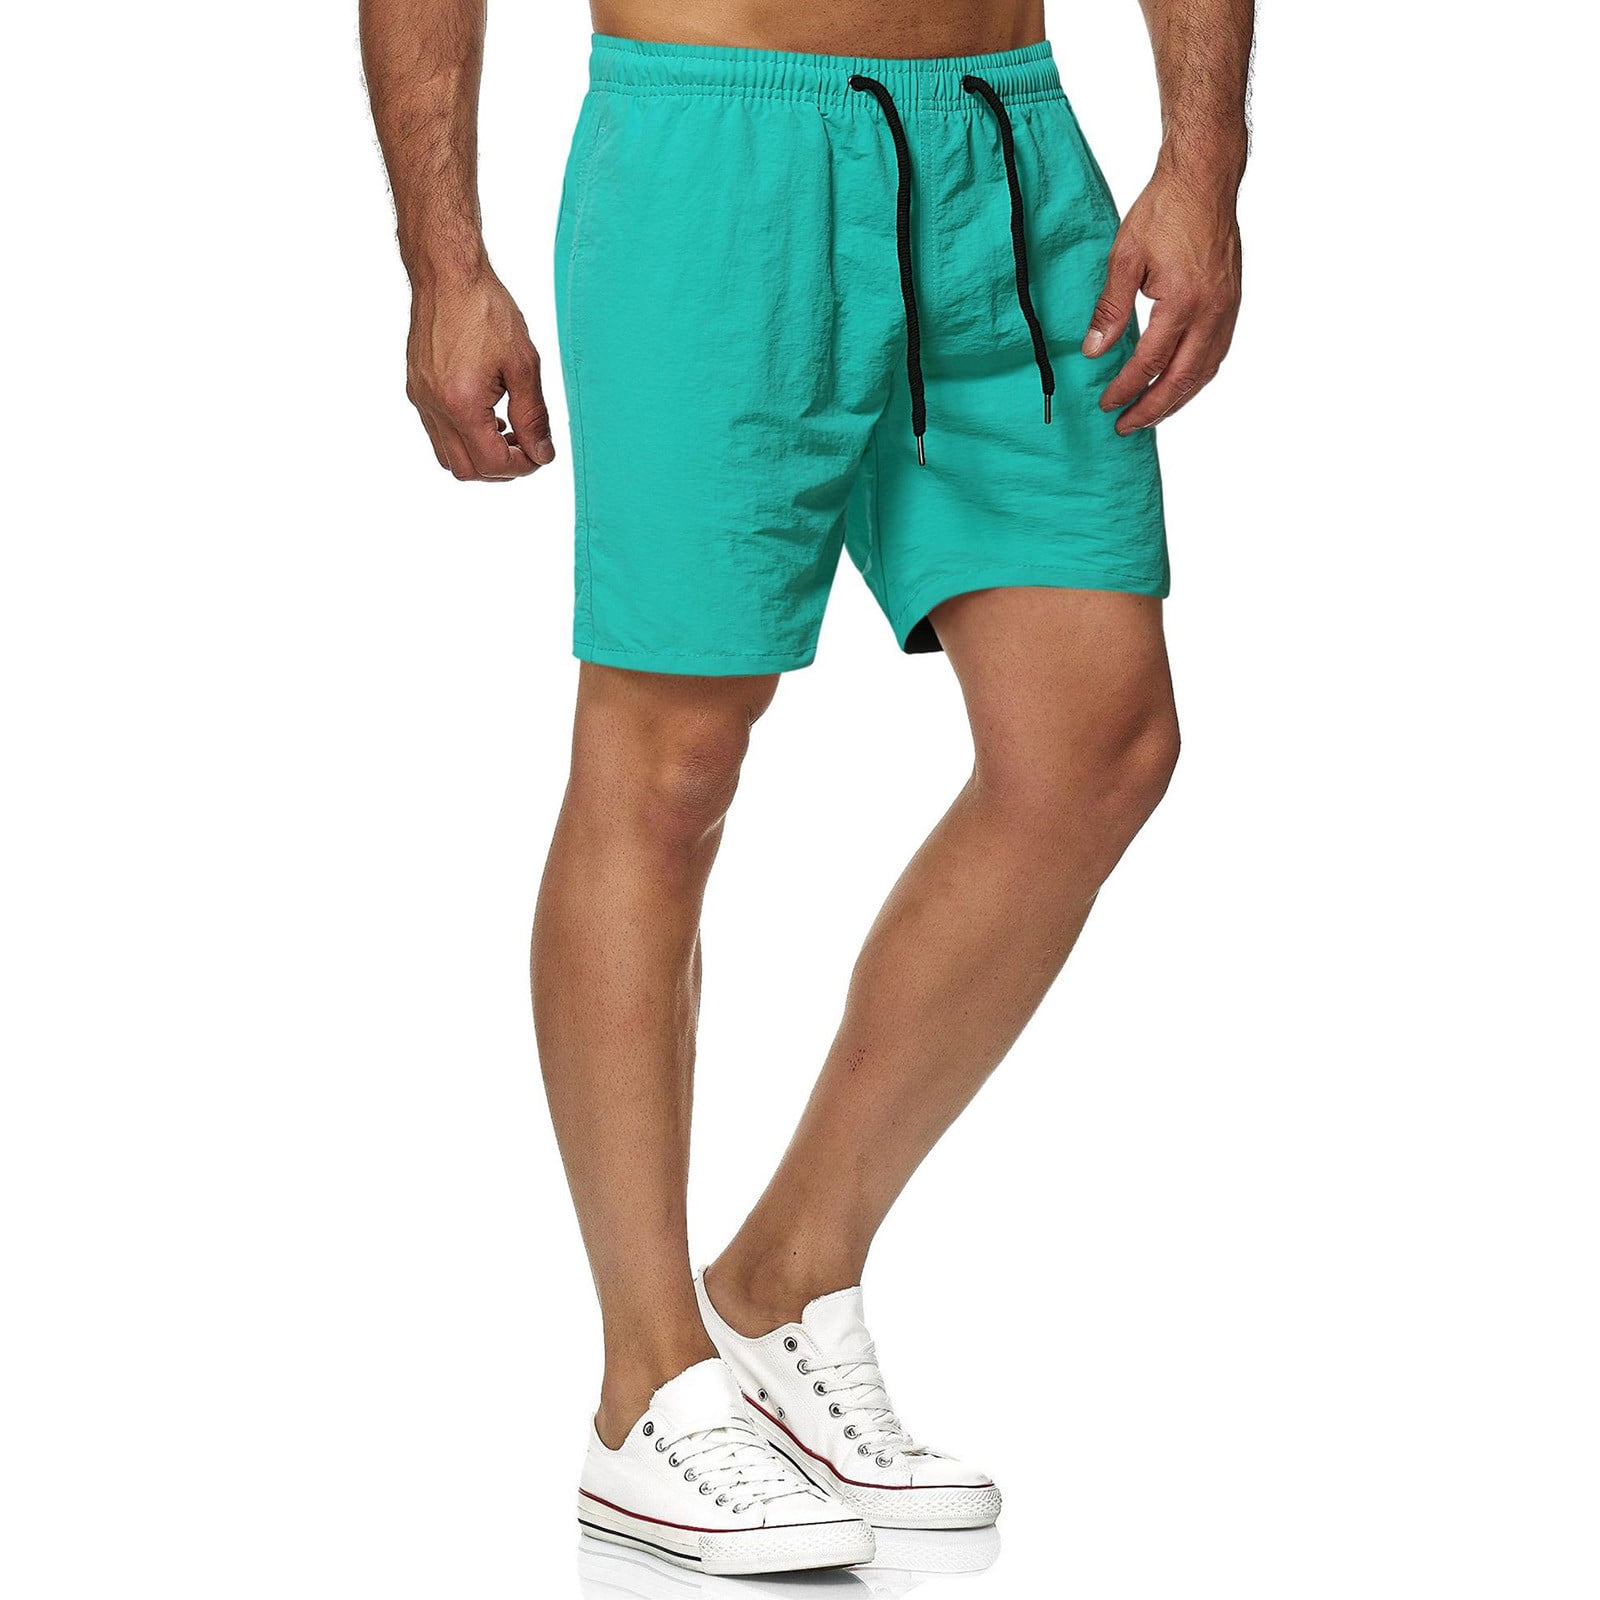 AXXD Short Shorts for Men,Athletic Work Shorts Elastic Waist Athletic ...